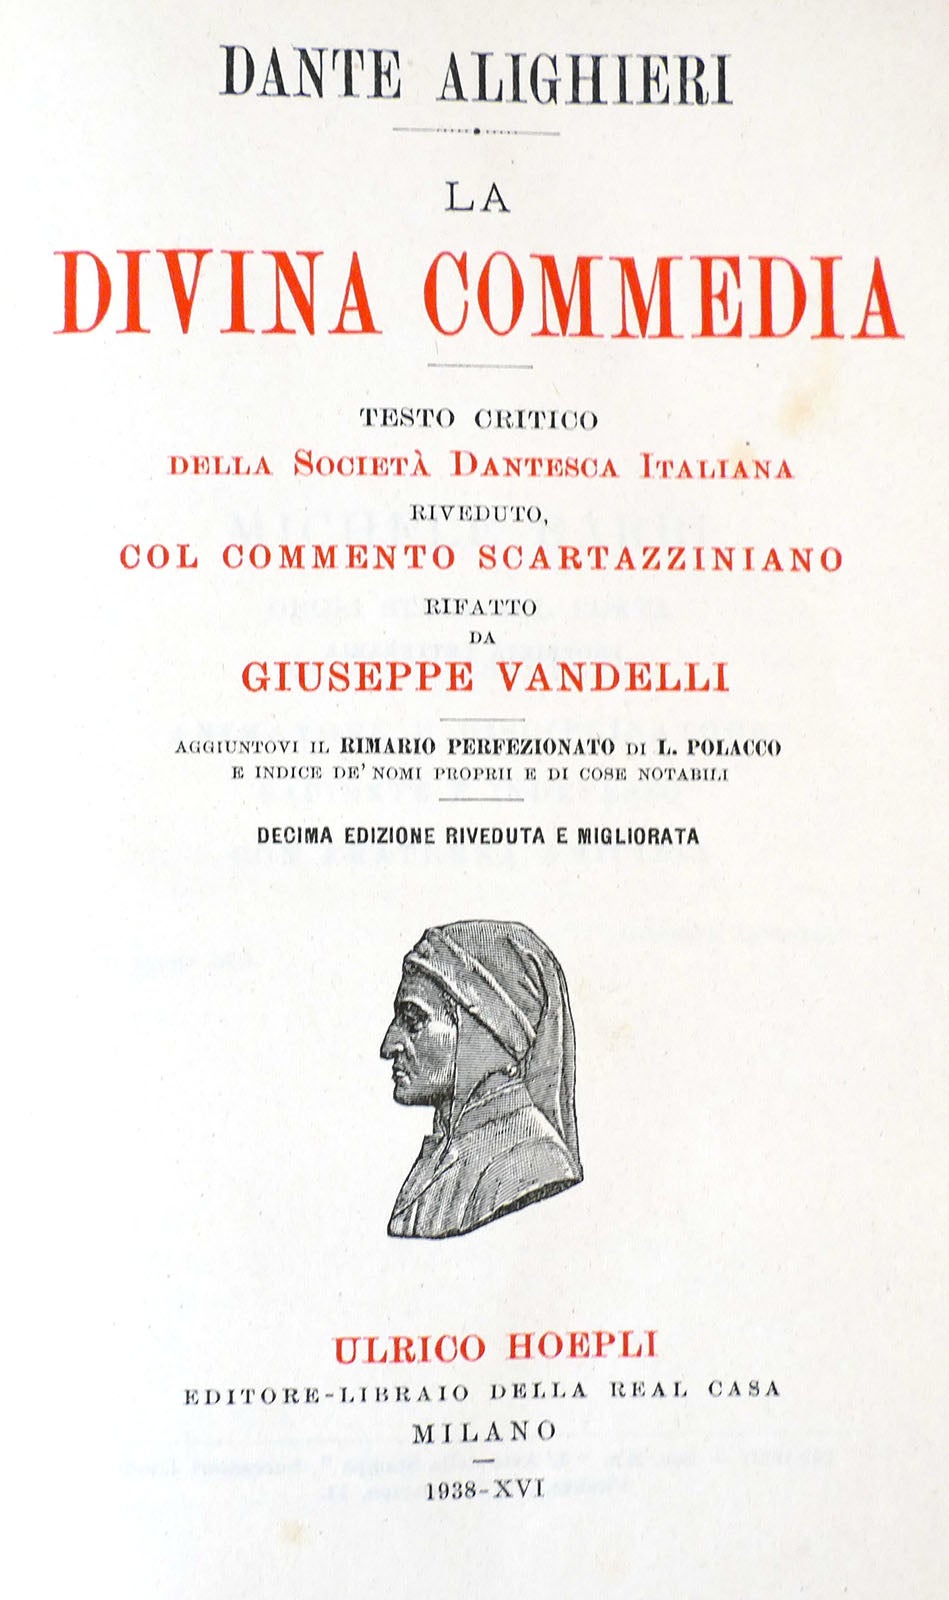 The Divine Comedy by Dante Alighieri 3 Volume Set: Inferno 